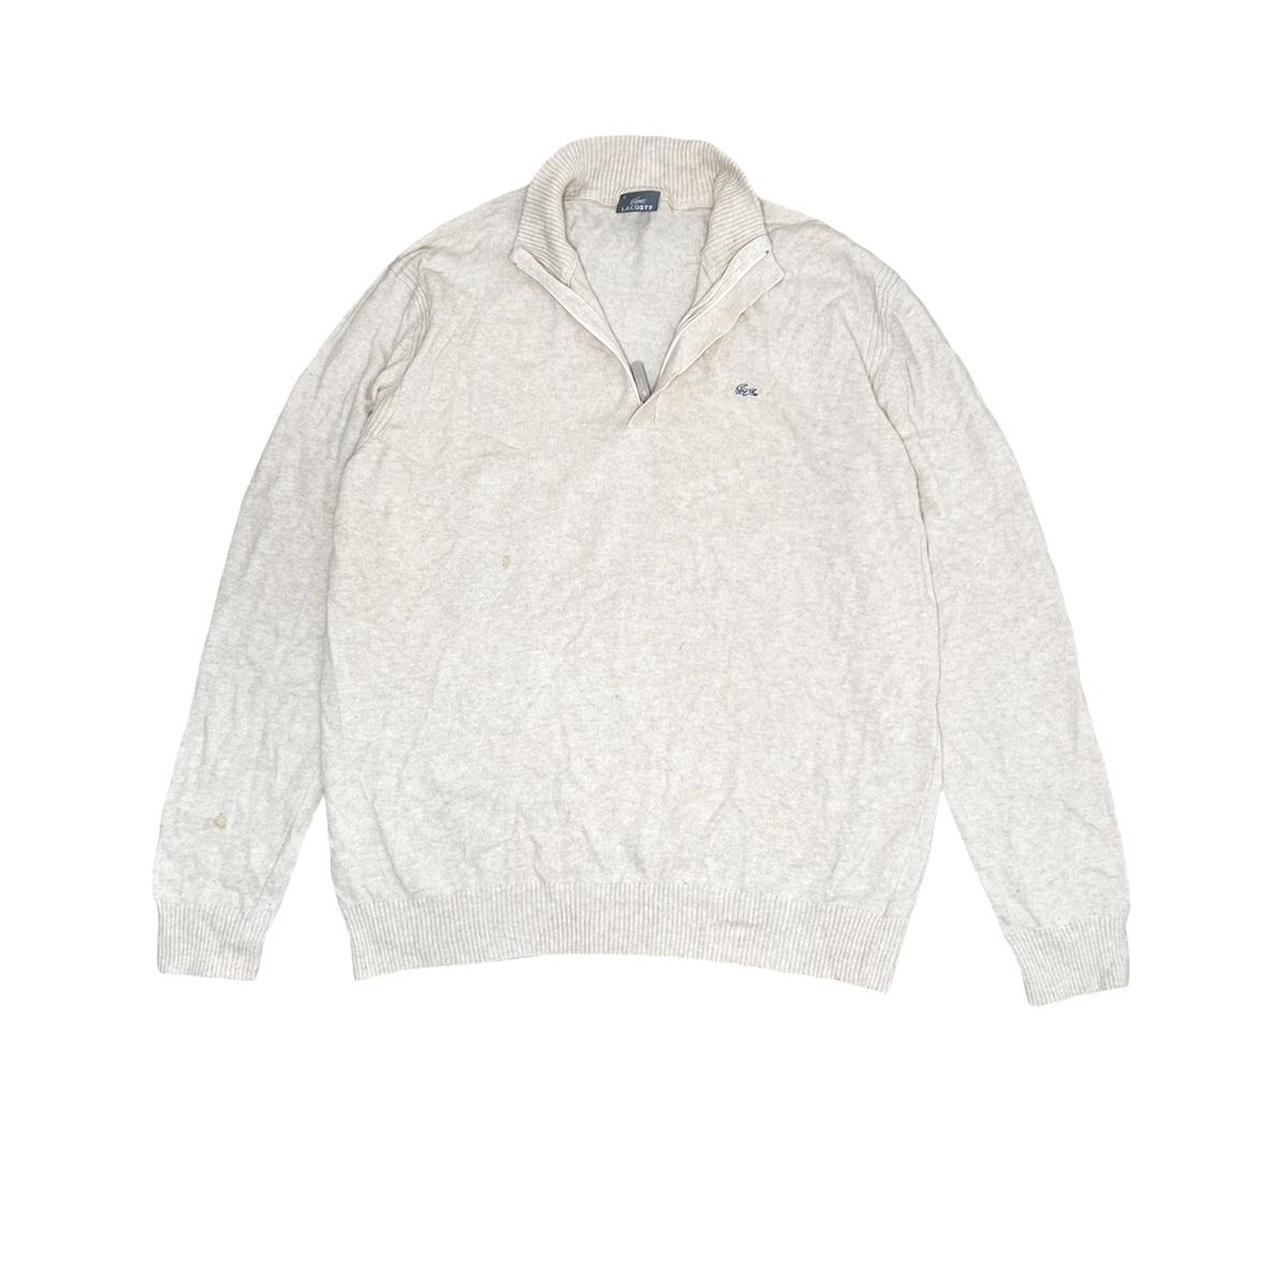 Vintage Lacoste quarter zip sweater - size large to... - Depop